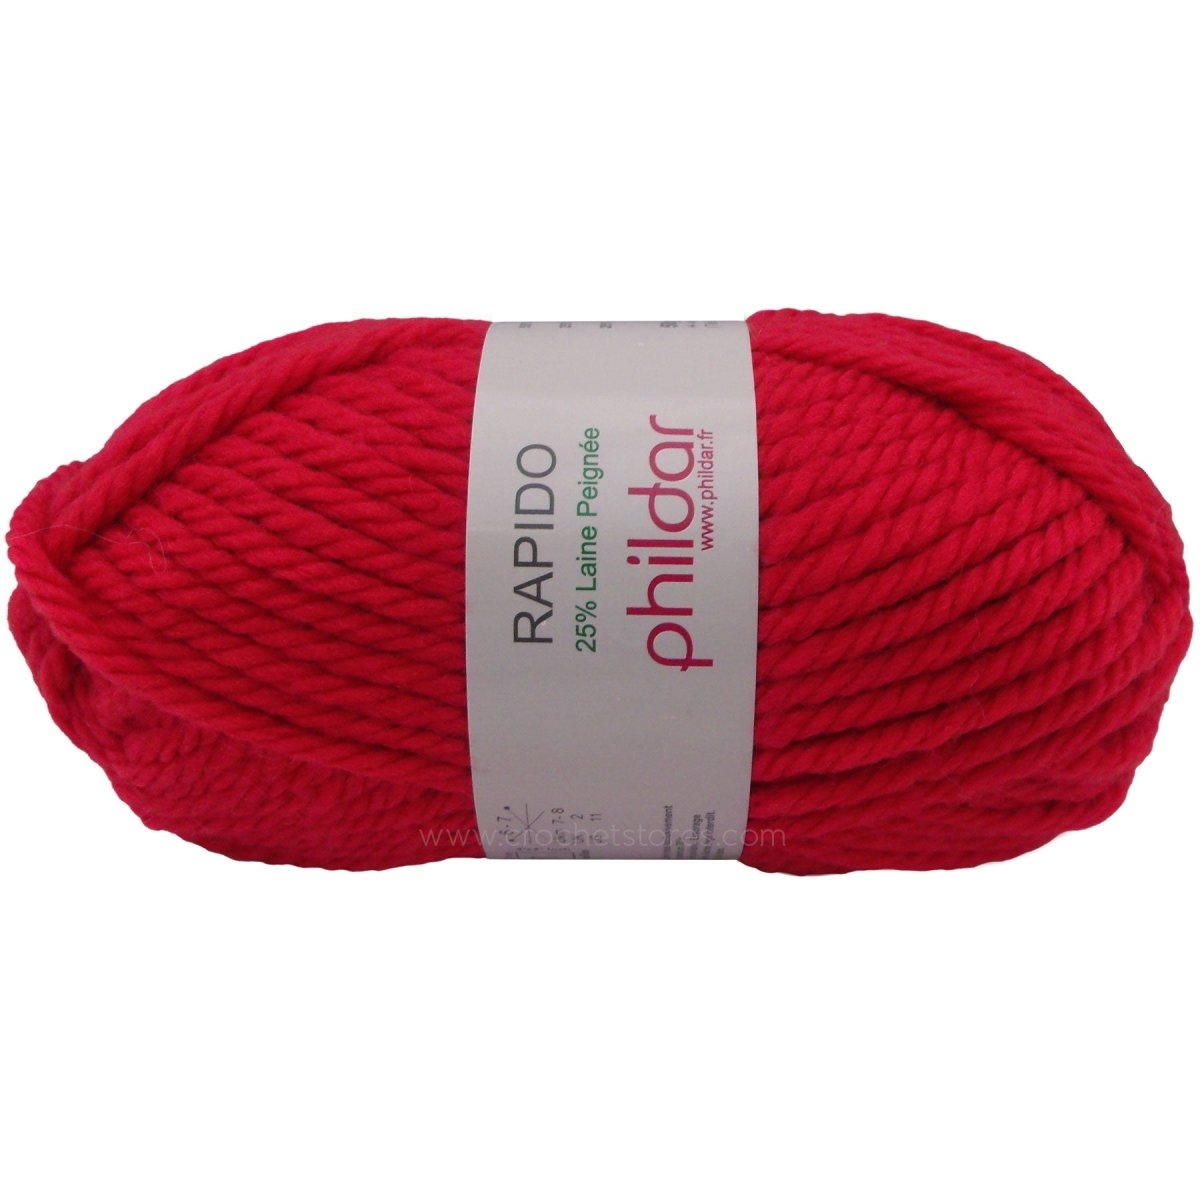 RAPIDO - Crochetstores500981-073307673412831